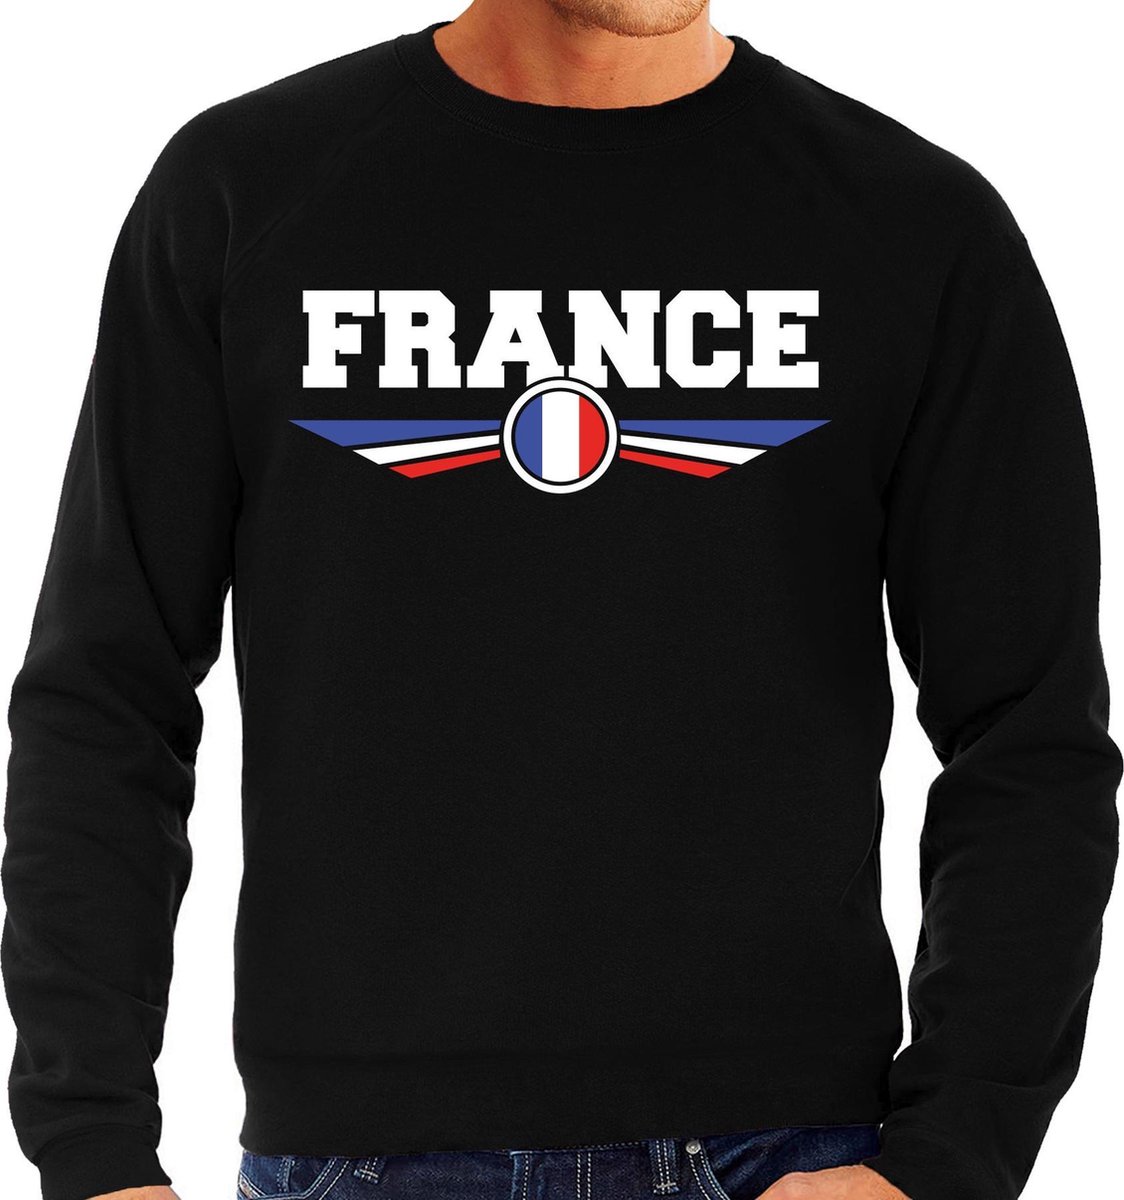 Frankrijk / France landen sweater / trui zwart heren XL